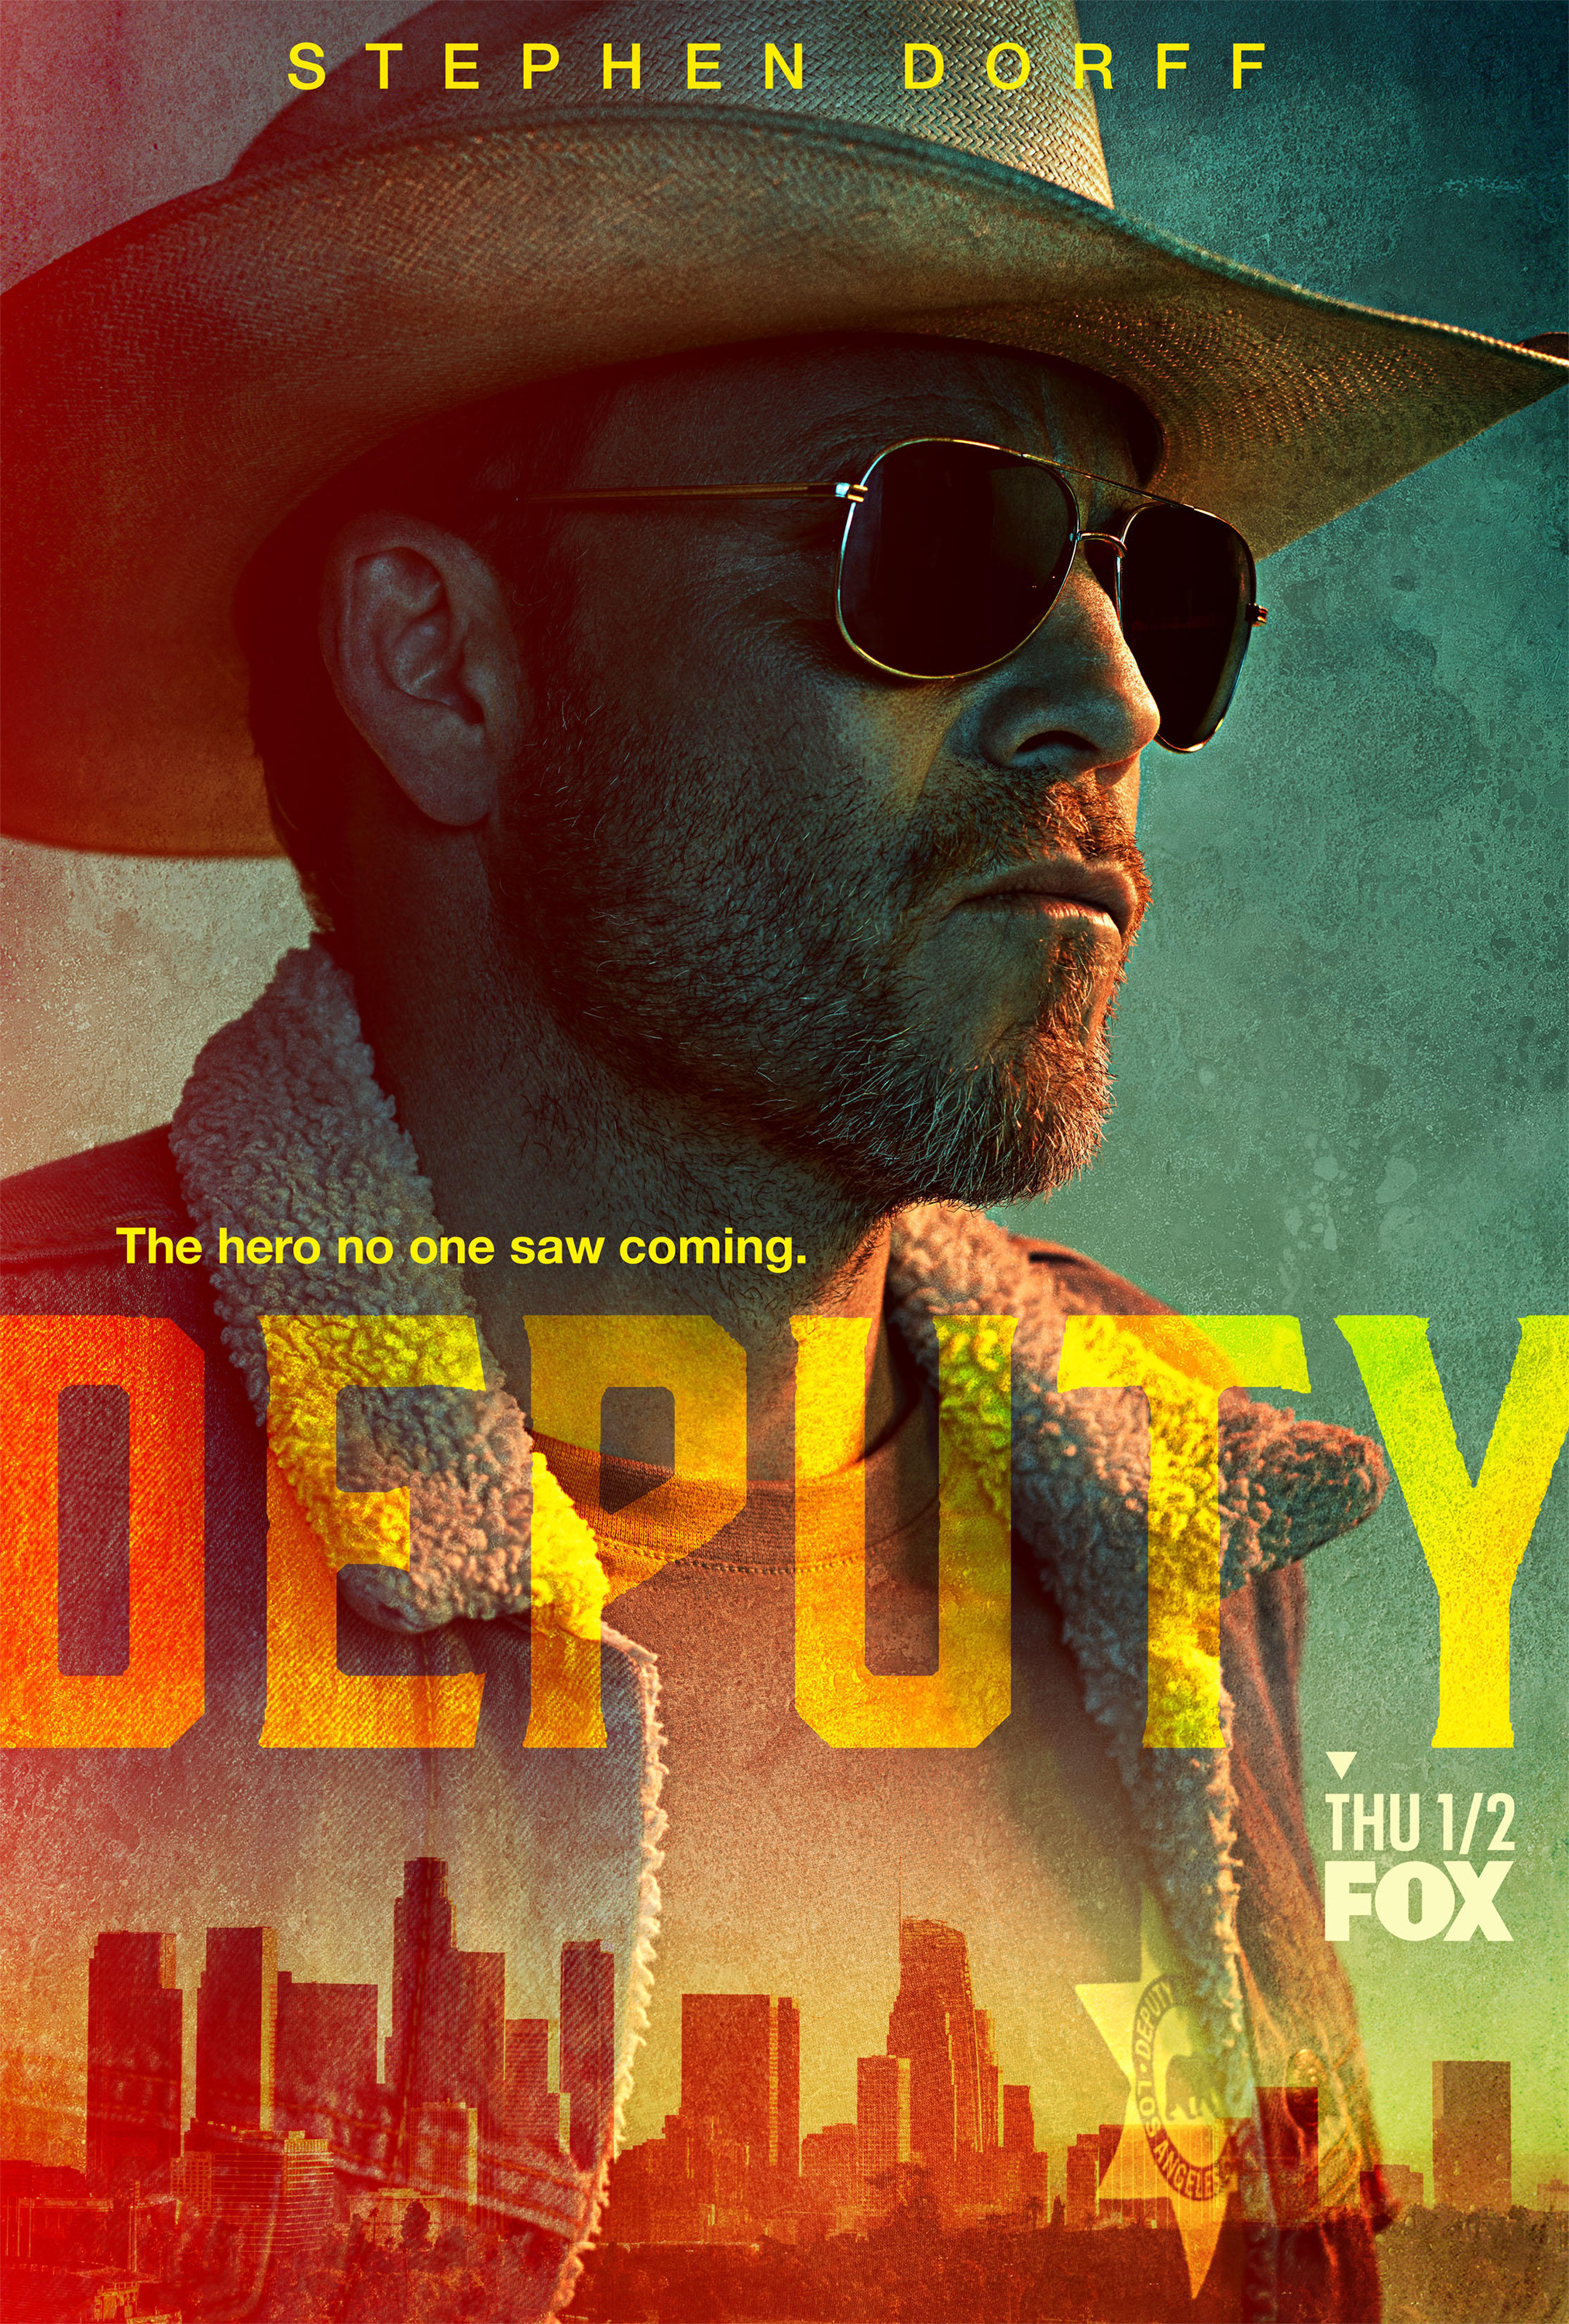 Mega Sized TV Poster Image for Deputy 